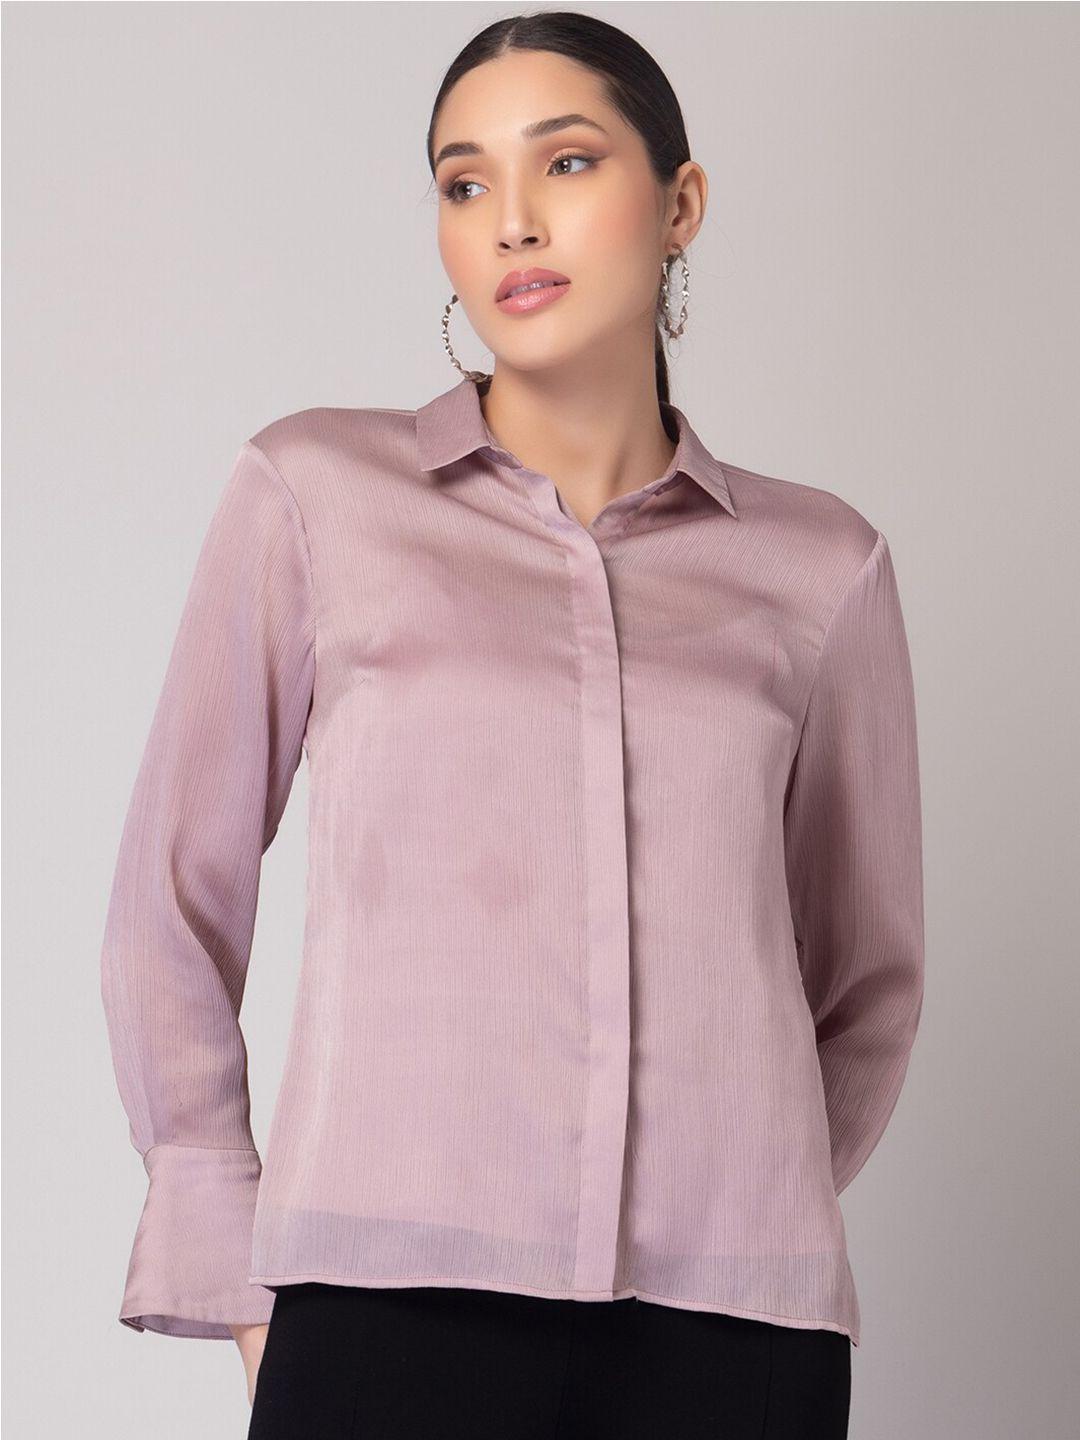 faballey pink chiffon shirt style top